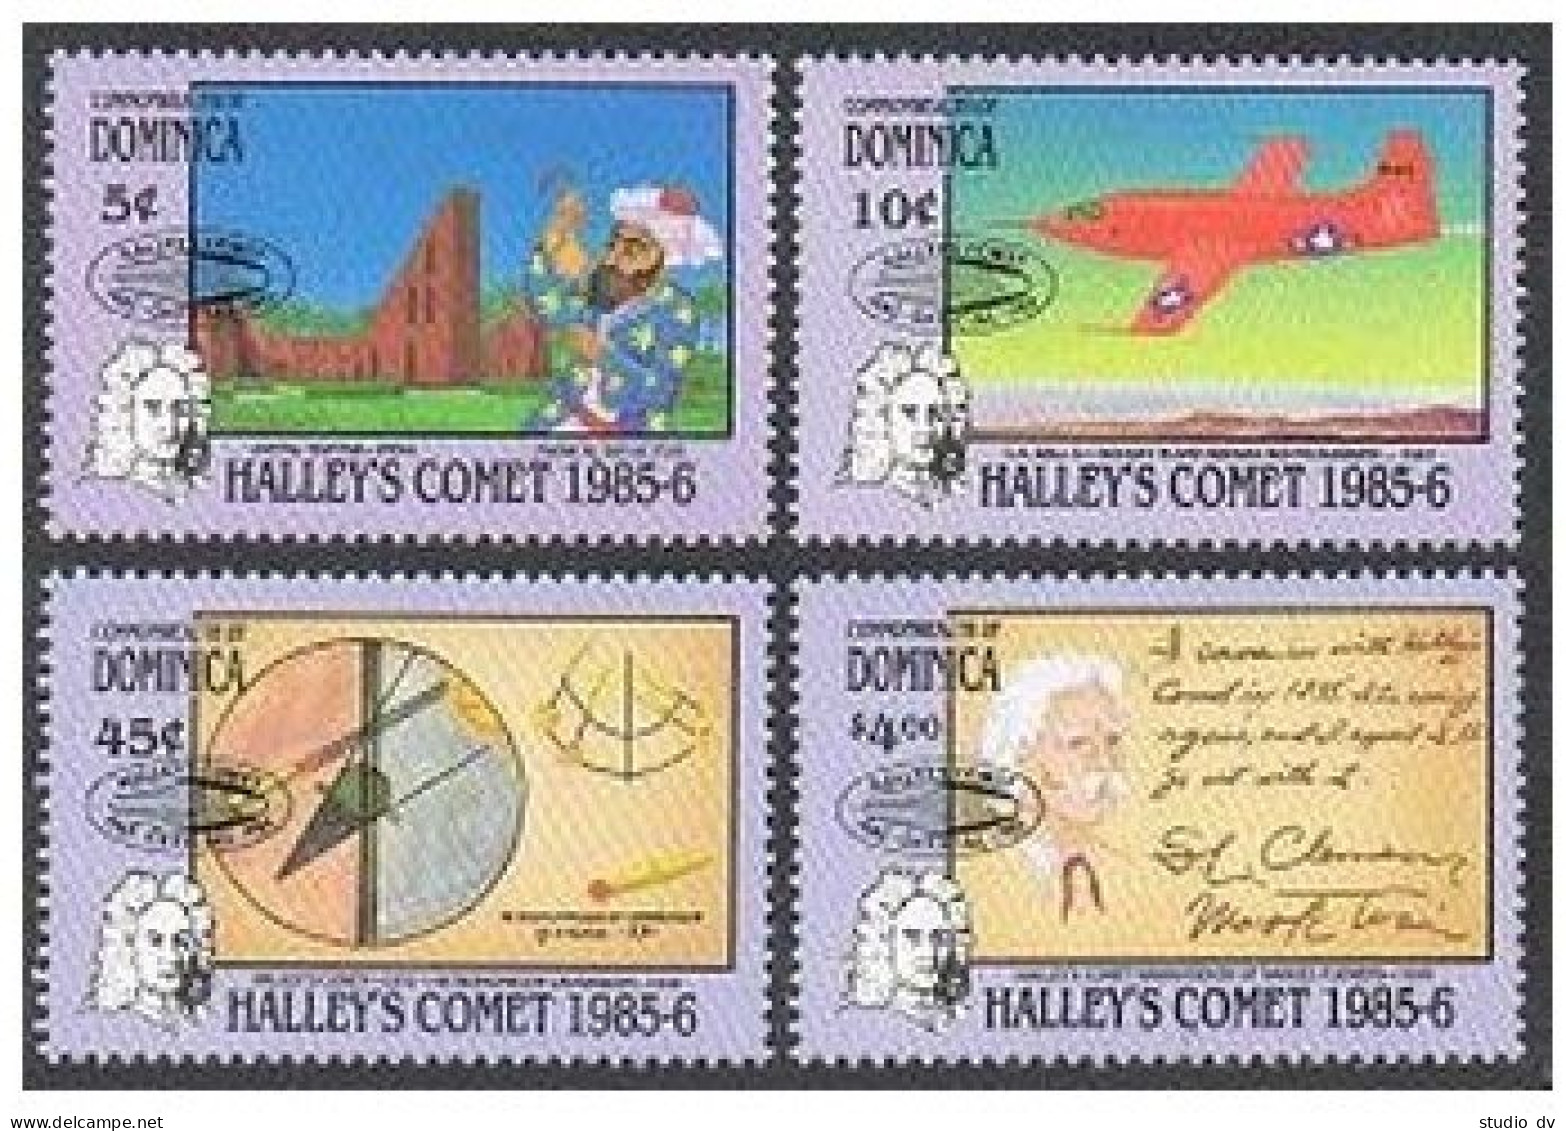 Dominica 945-948,949.MNH. Halley's Comet,Plane,M.Twain.Nasir Al Tusi,astronomer. - Dominica (1978-...)